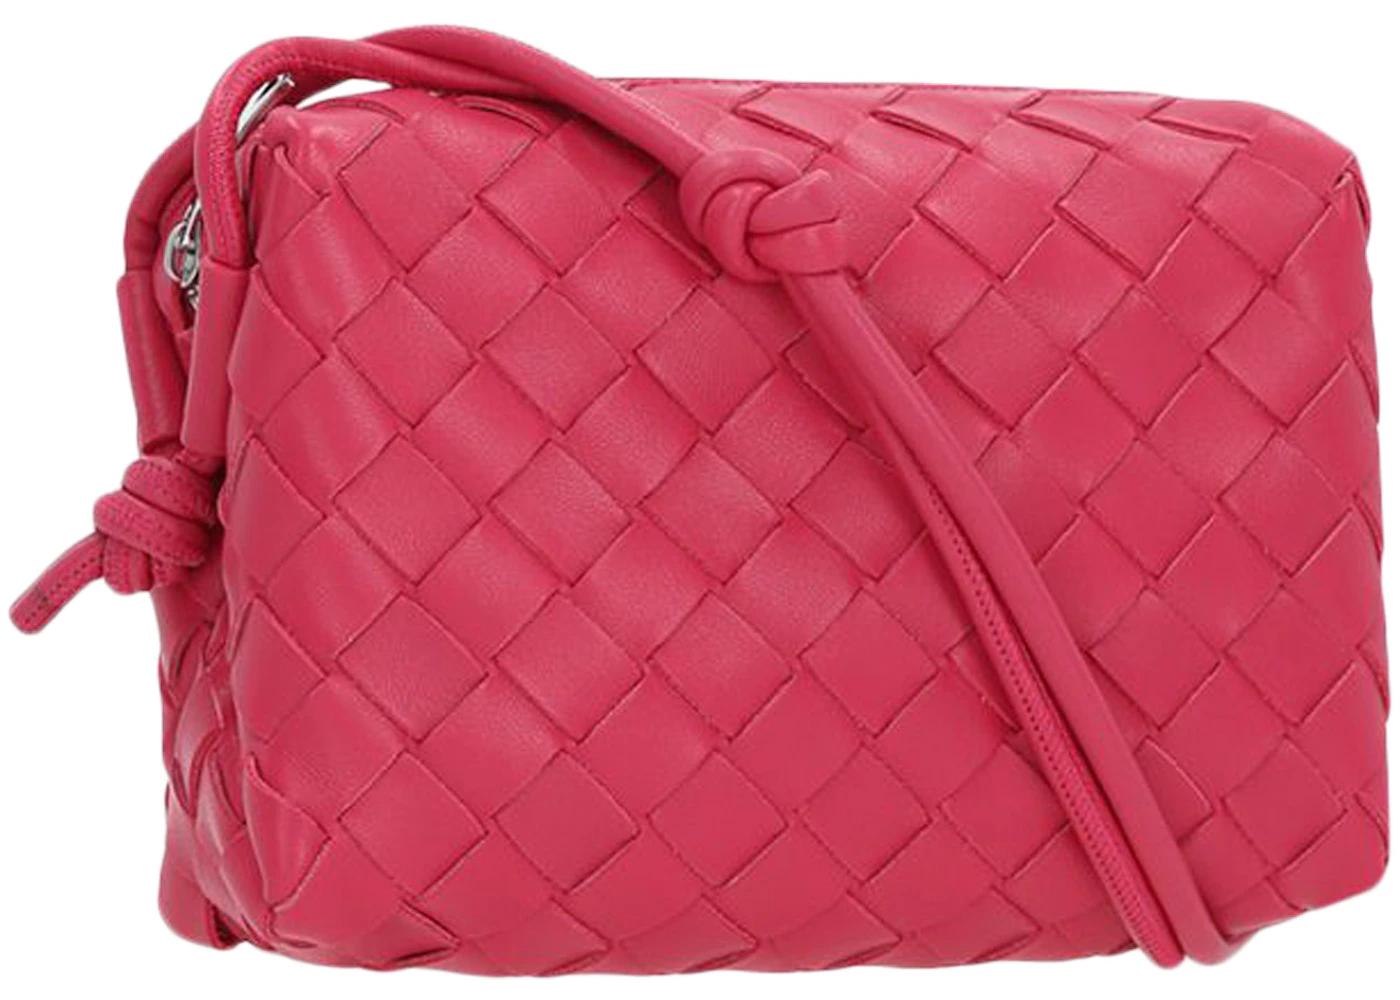 Intrecciato Loop Shoulder Bag Dark Pink by BOTTEGA VENETA